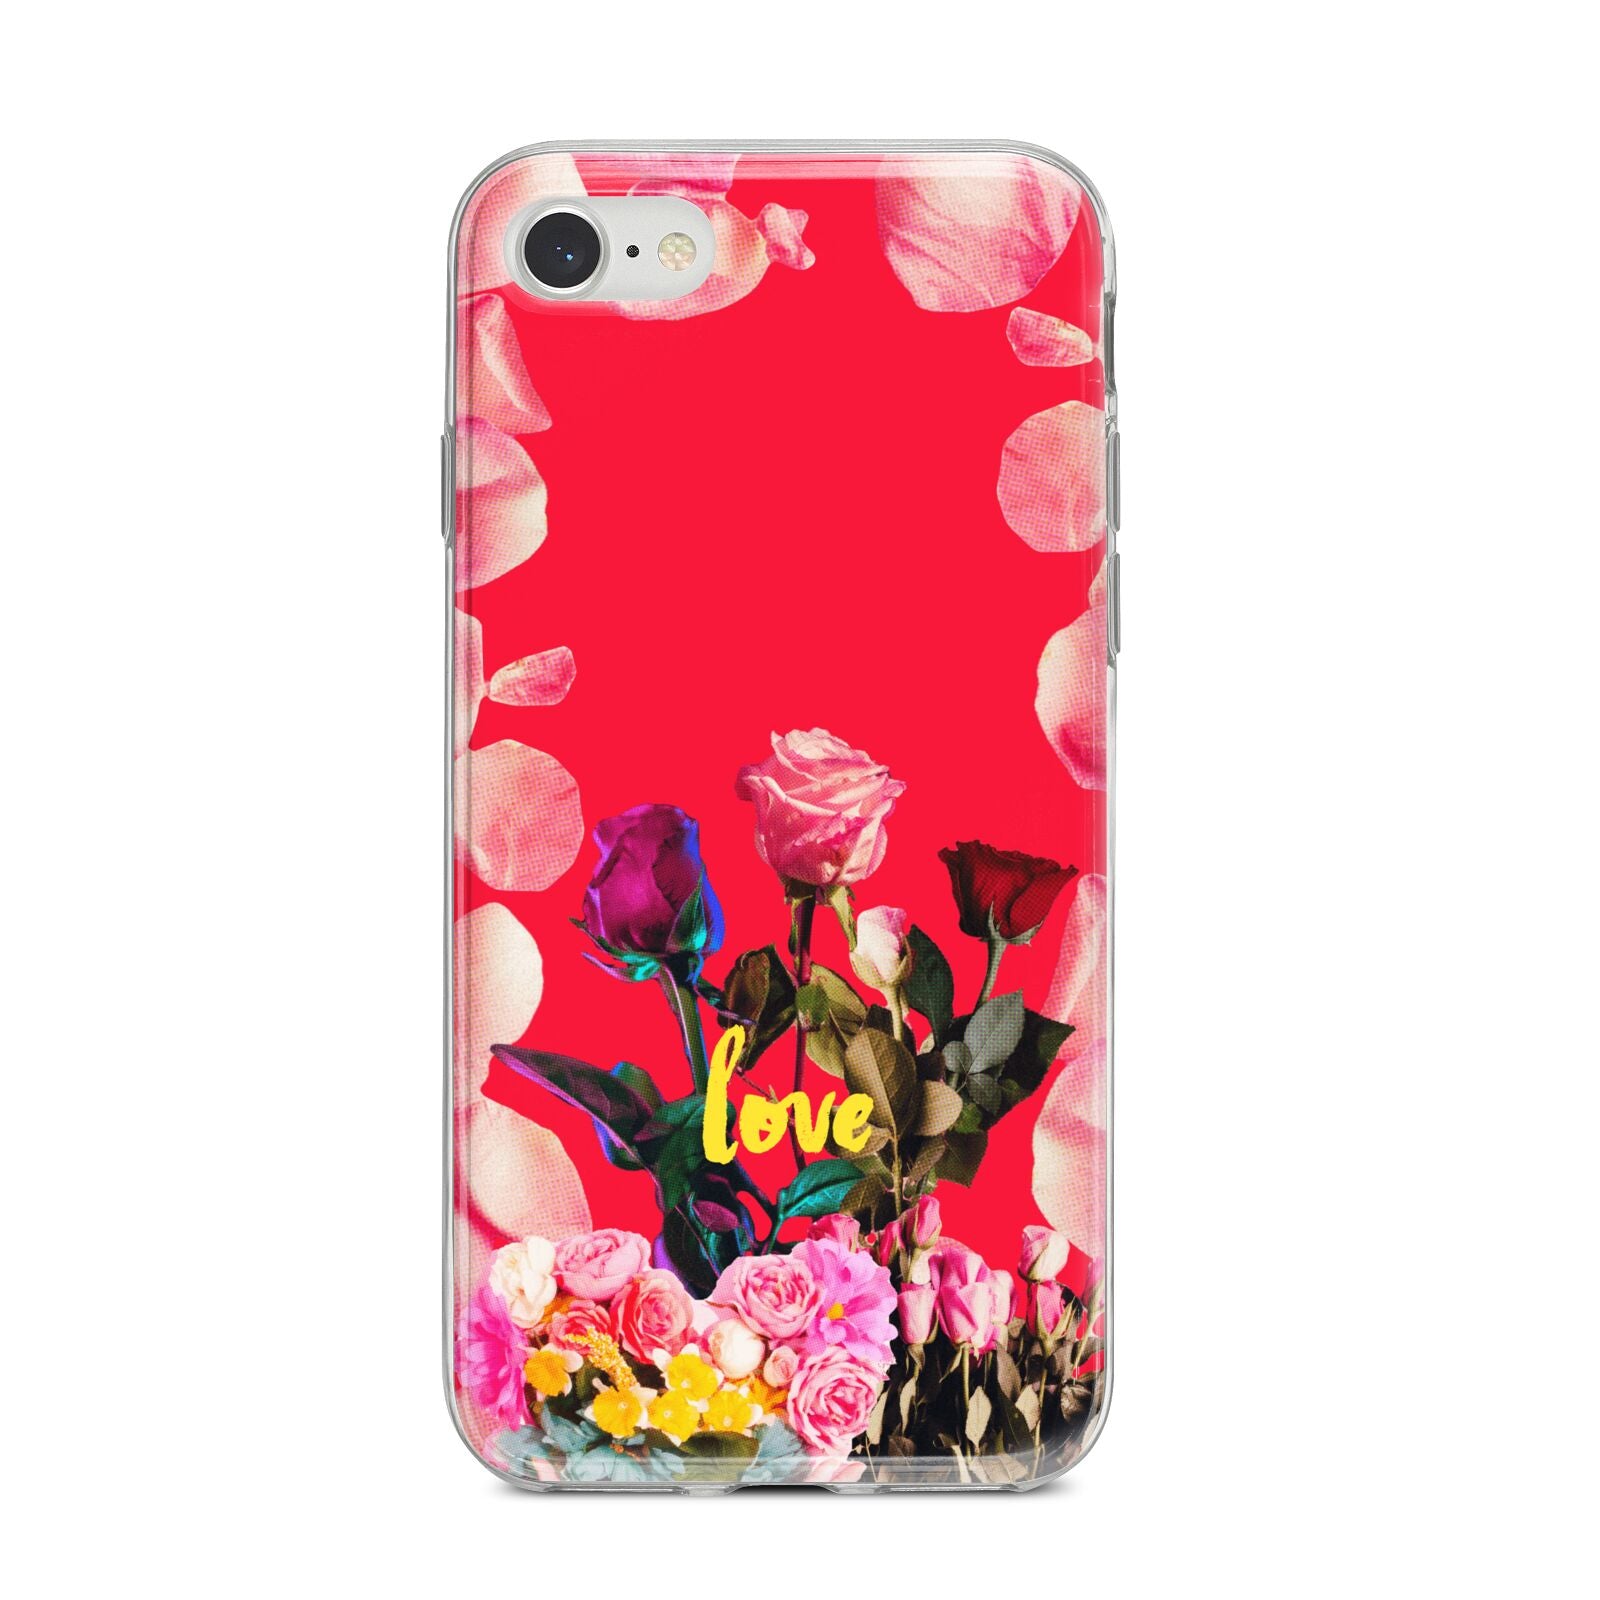 Retro Floral Valentine iPhone 8 Bumper Case on Silver iPhone